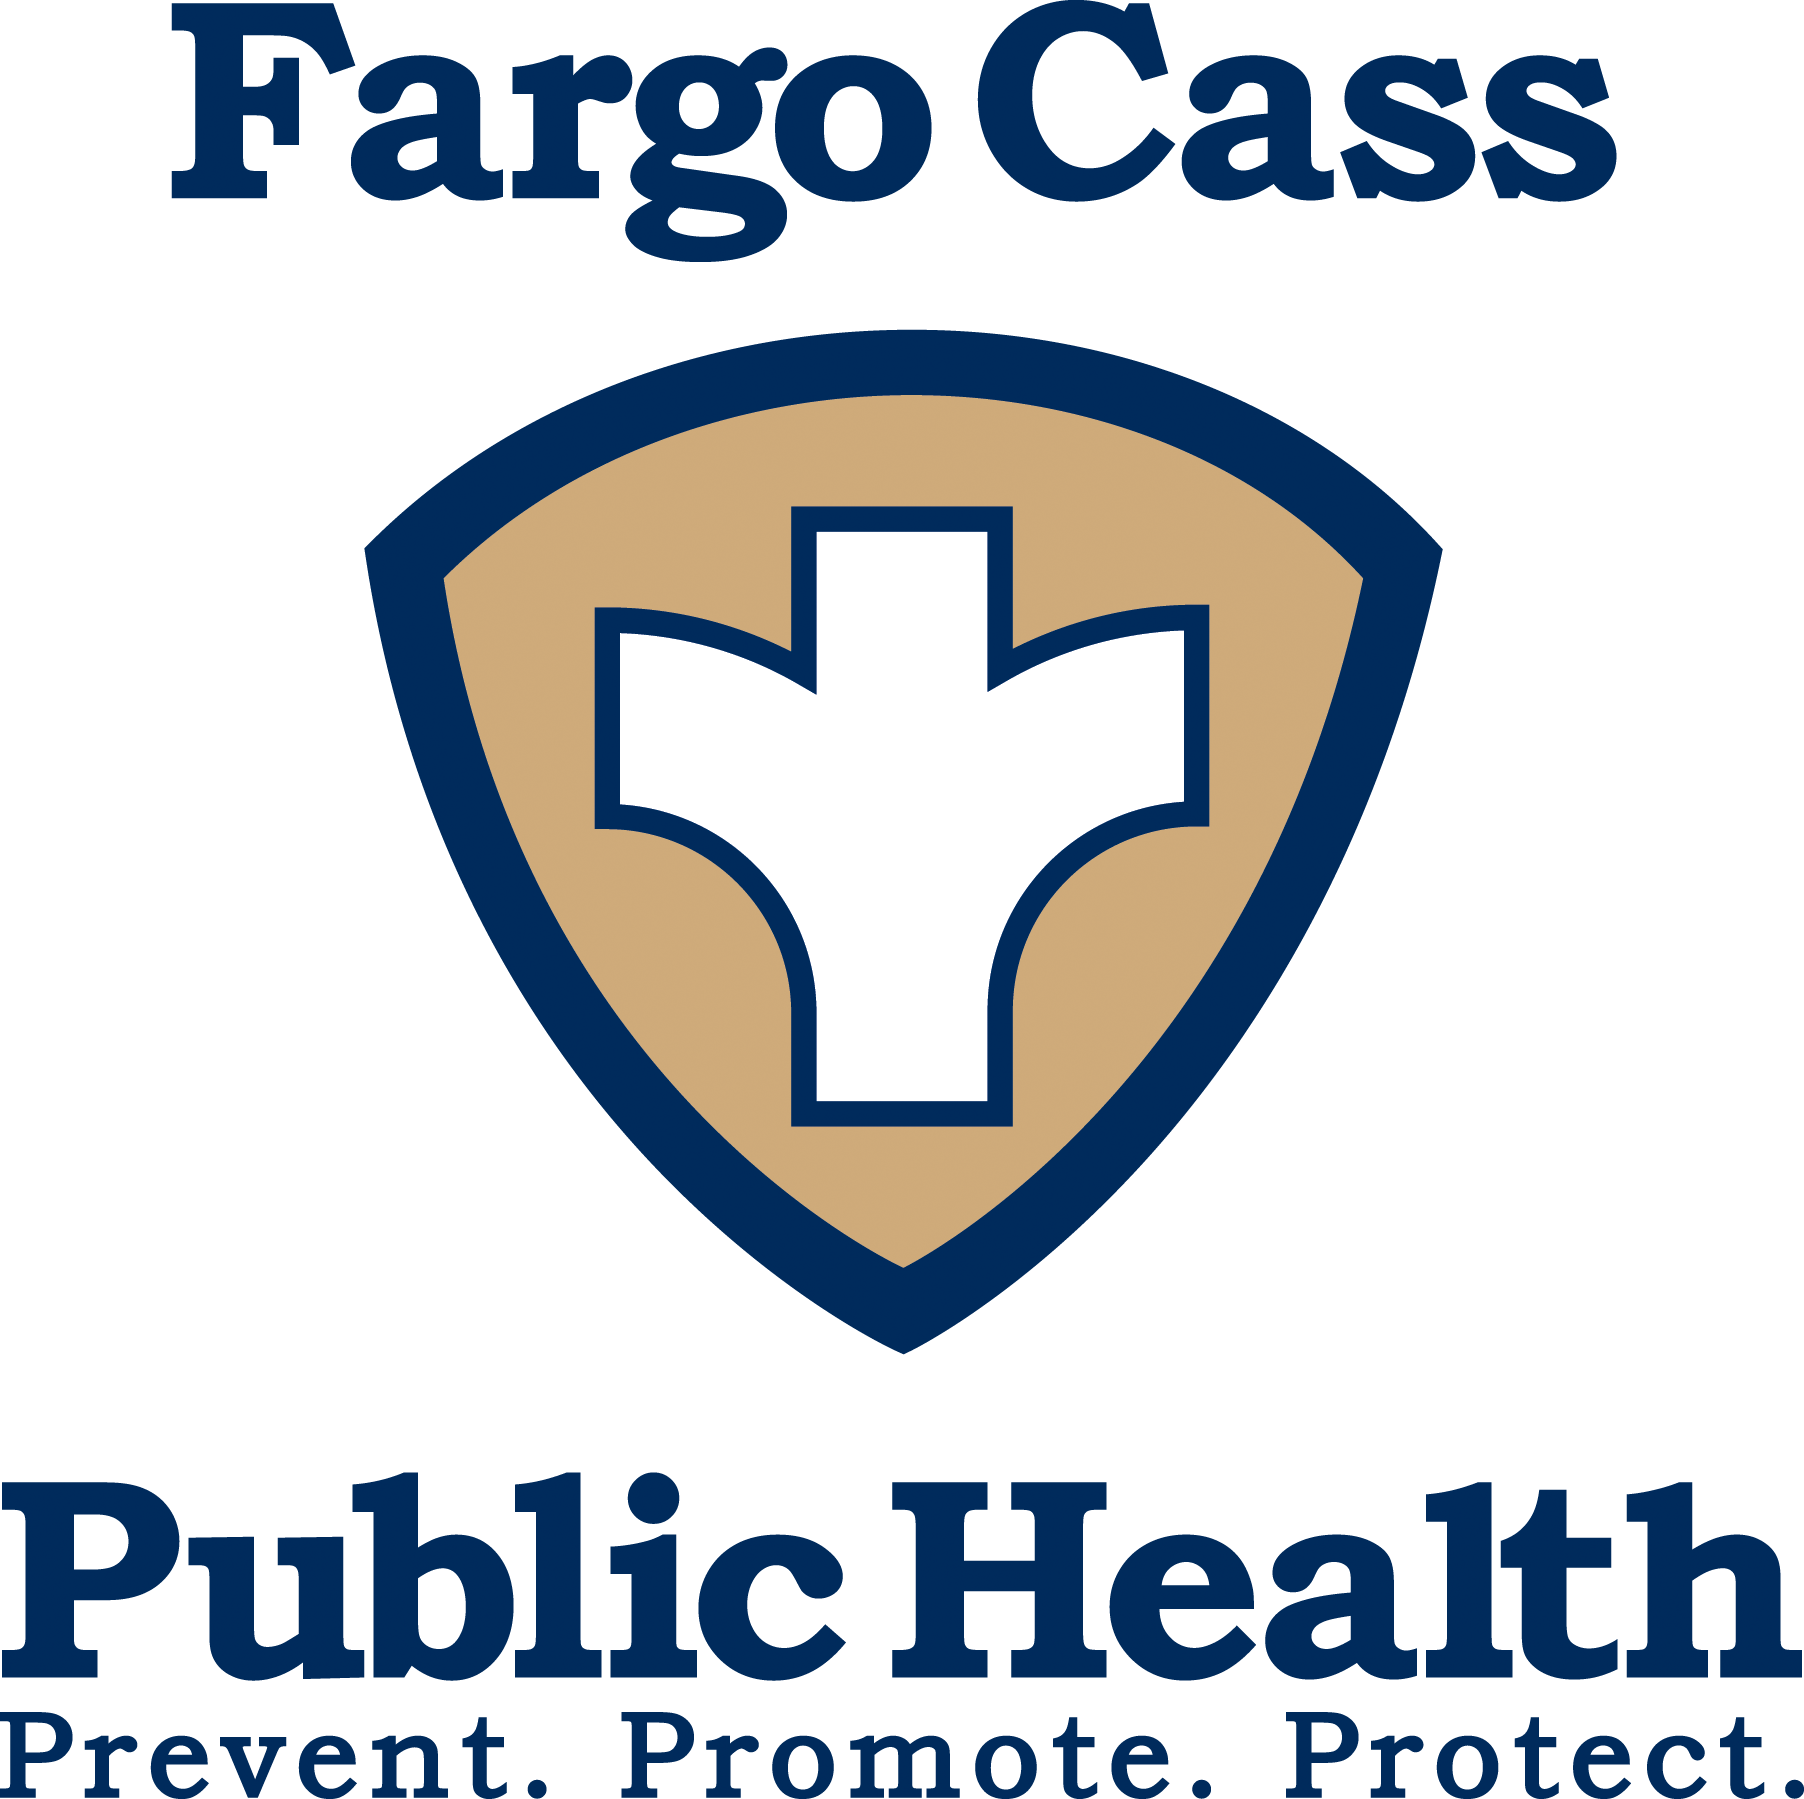 this graphic shoes the fargo cass public health logo